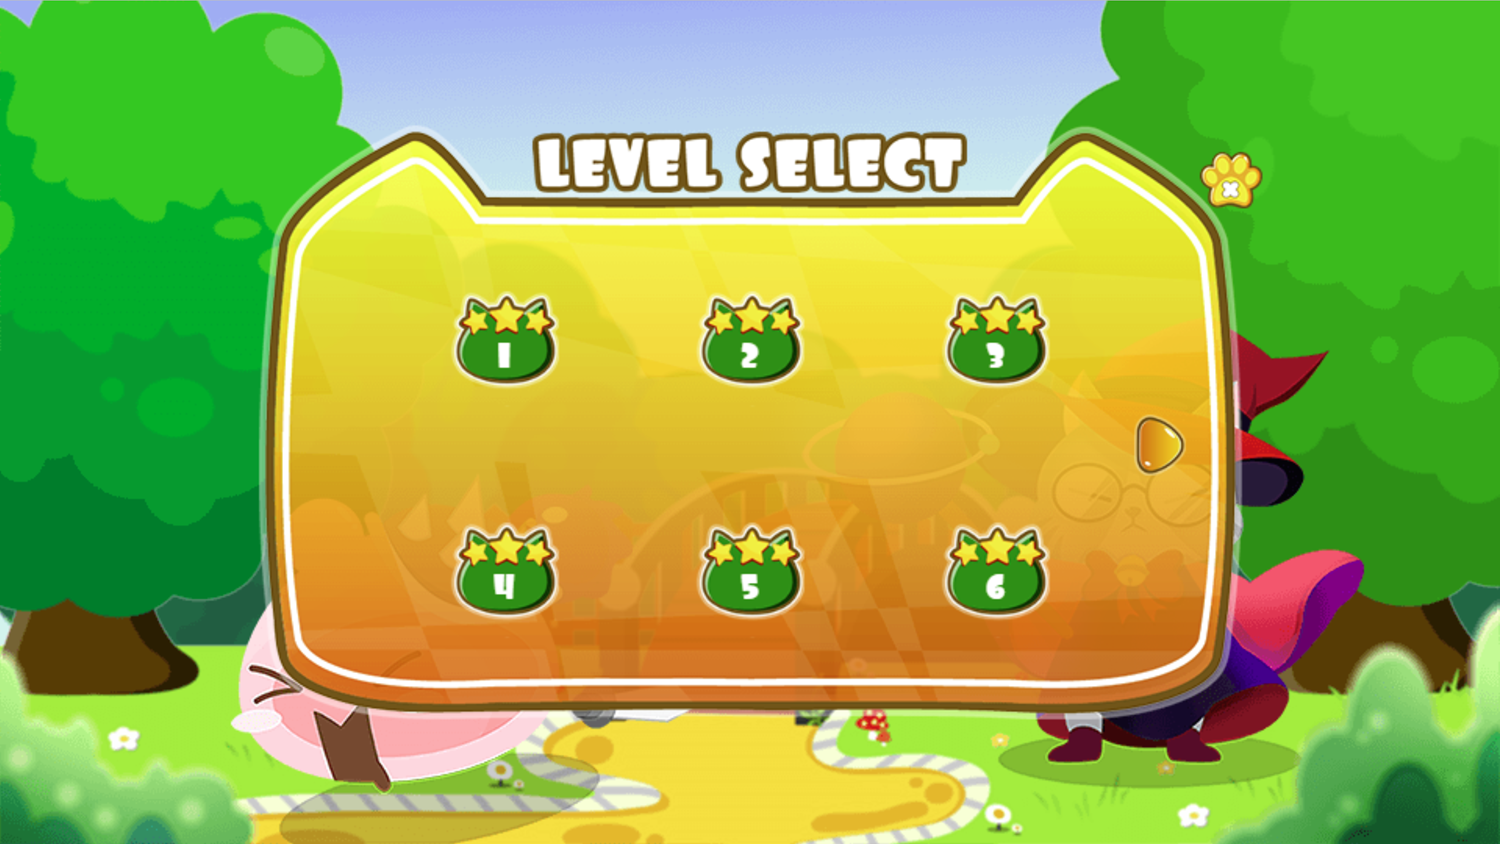 Cat Wizard Defense Game Level Select Screen Screenshot.